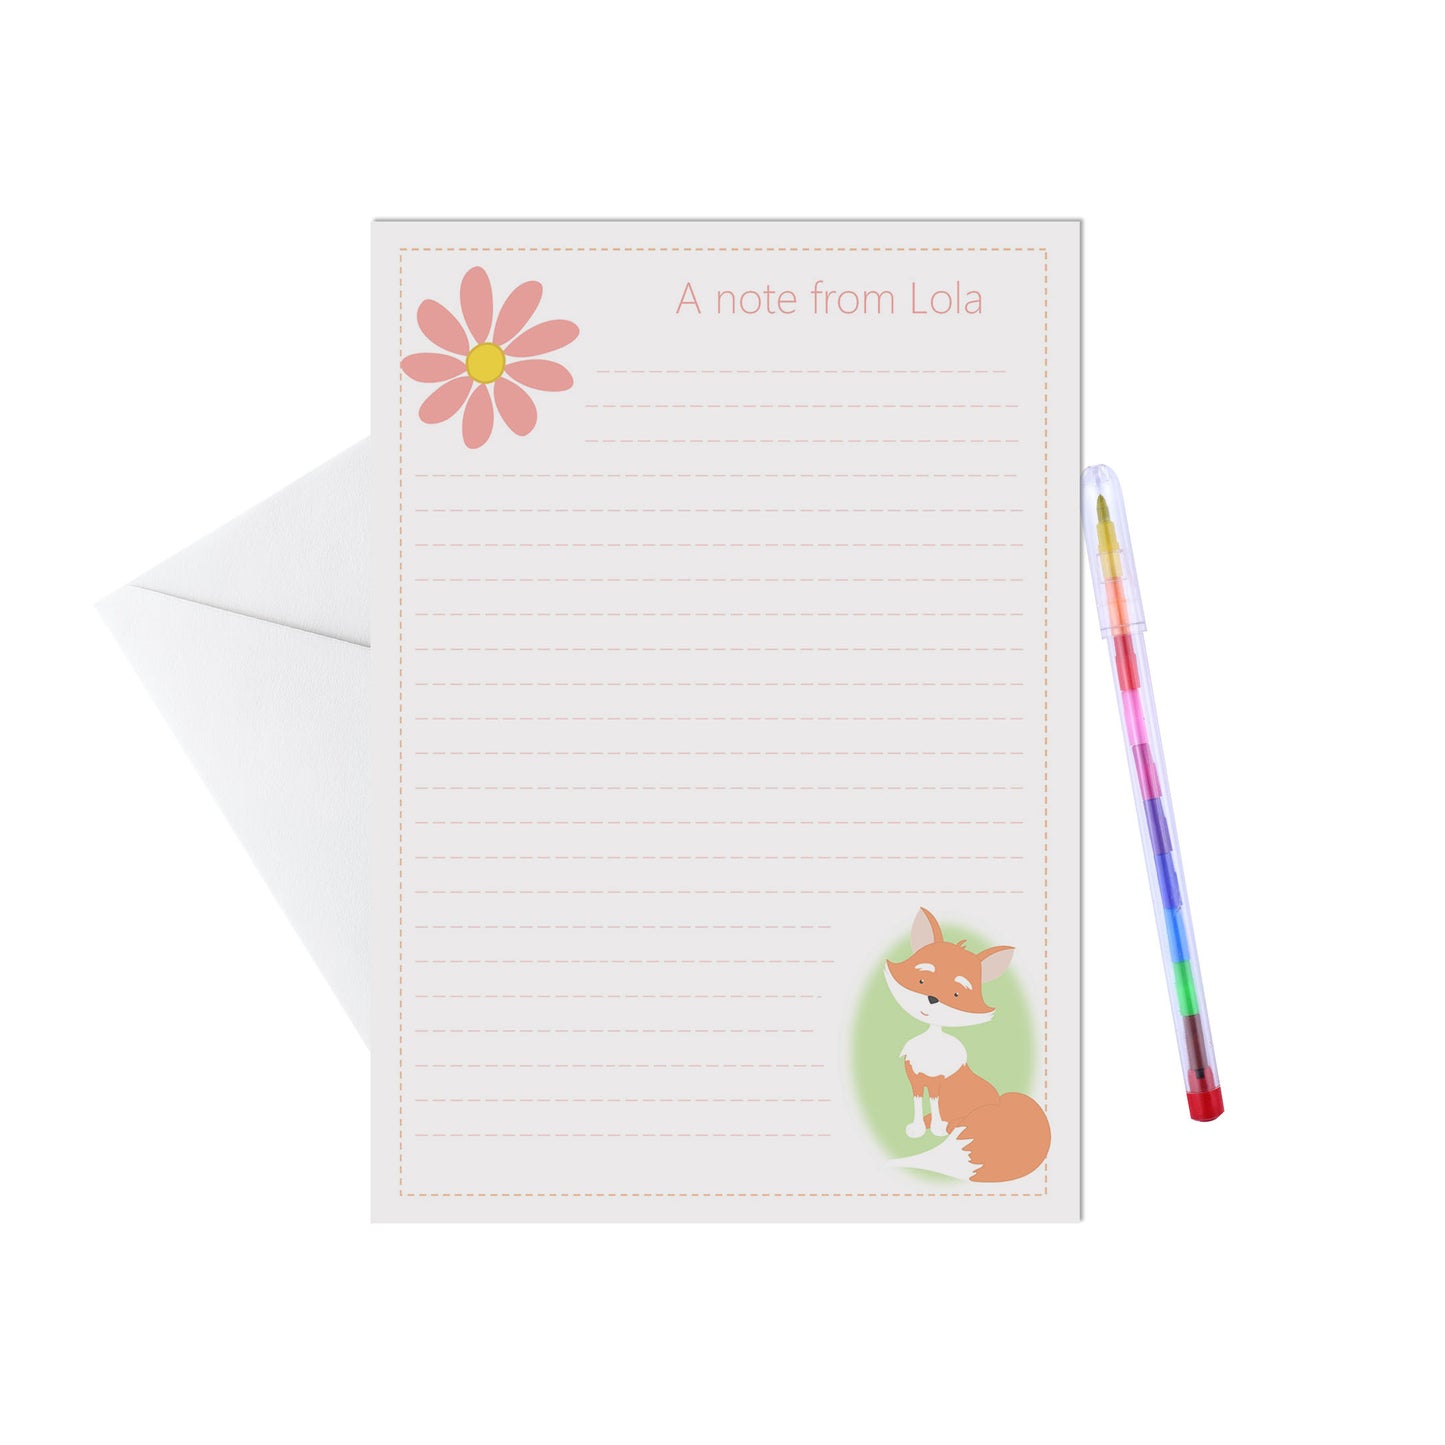 Woodland Animal Personalised Letter Writing Set - 15 Sheets & Envelopes - Lot Of Designs